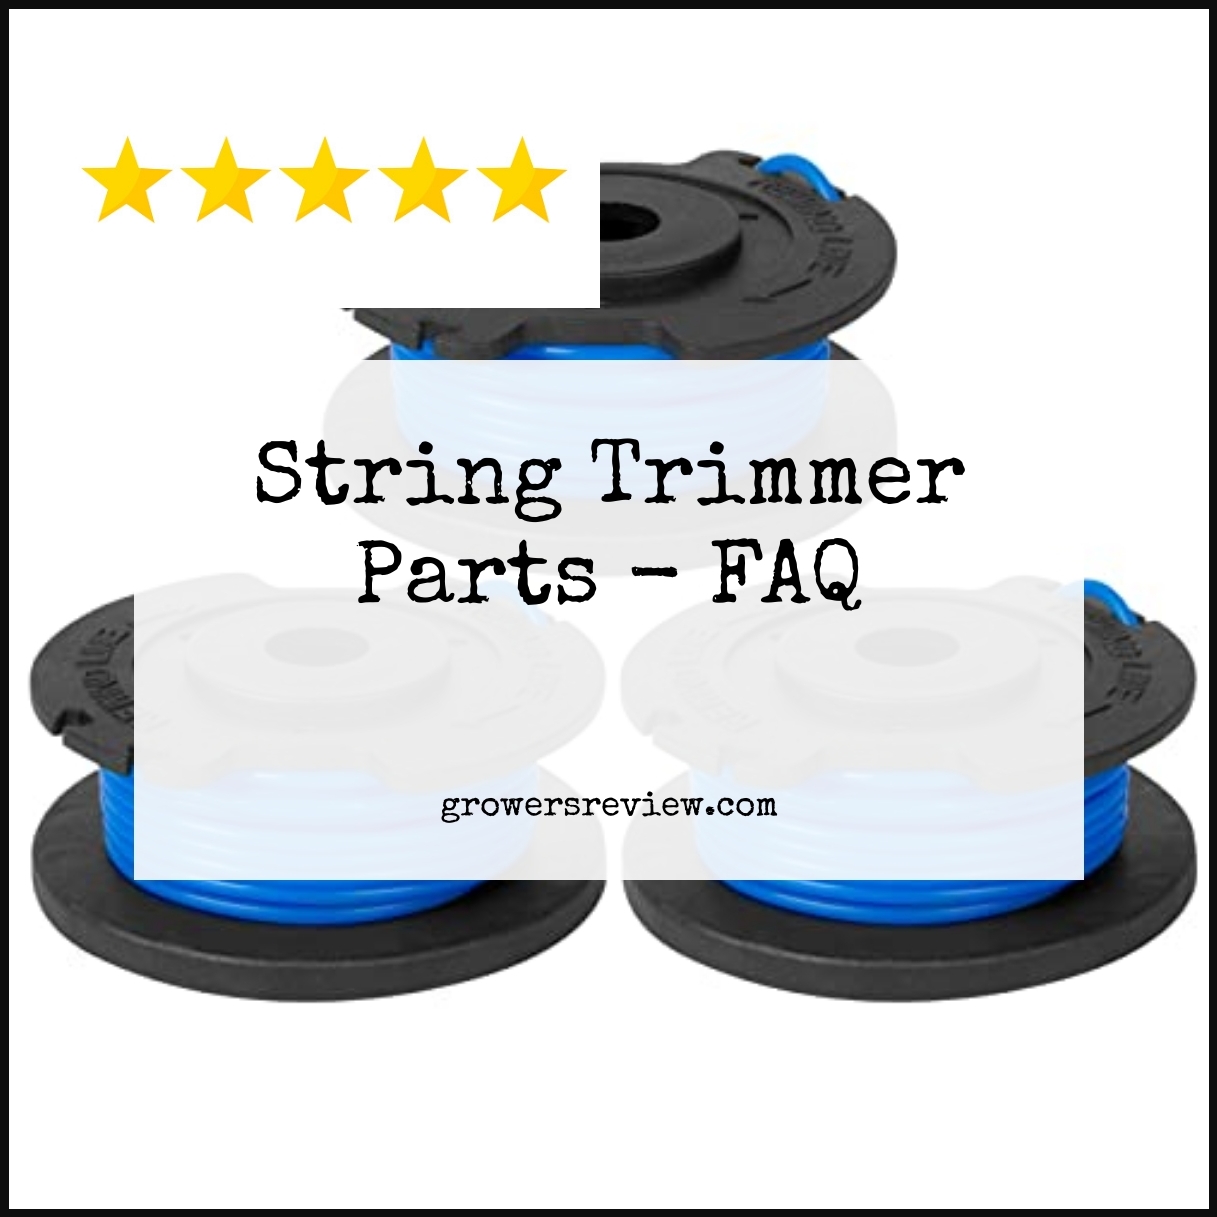 String Trimmer Parts - FAQ